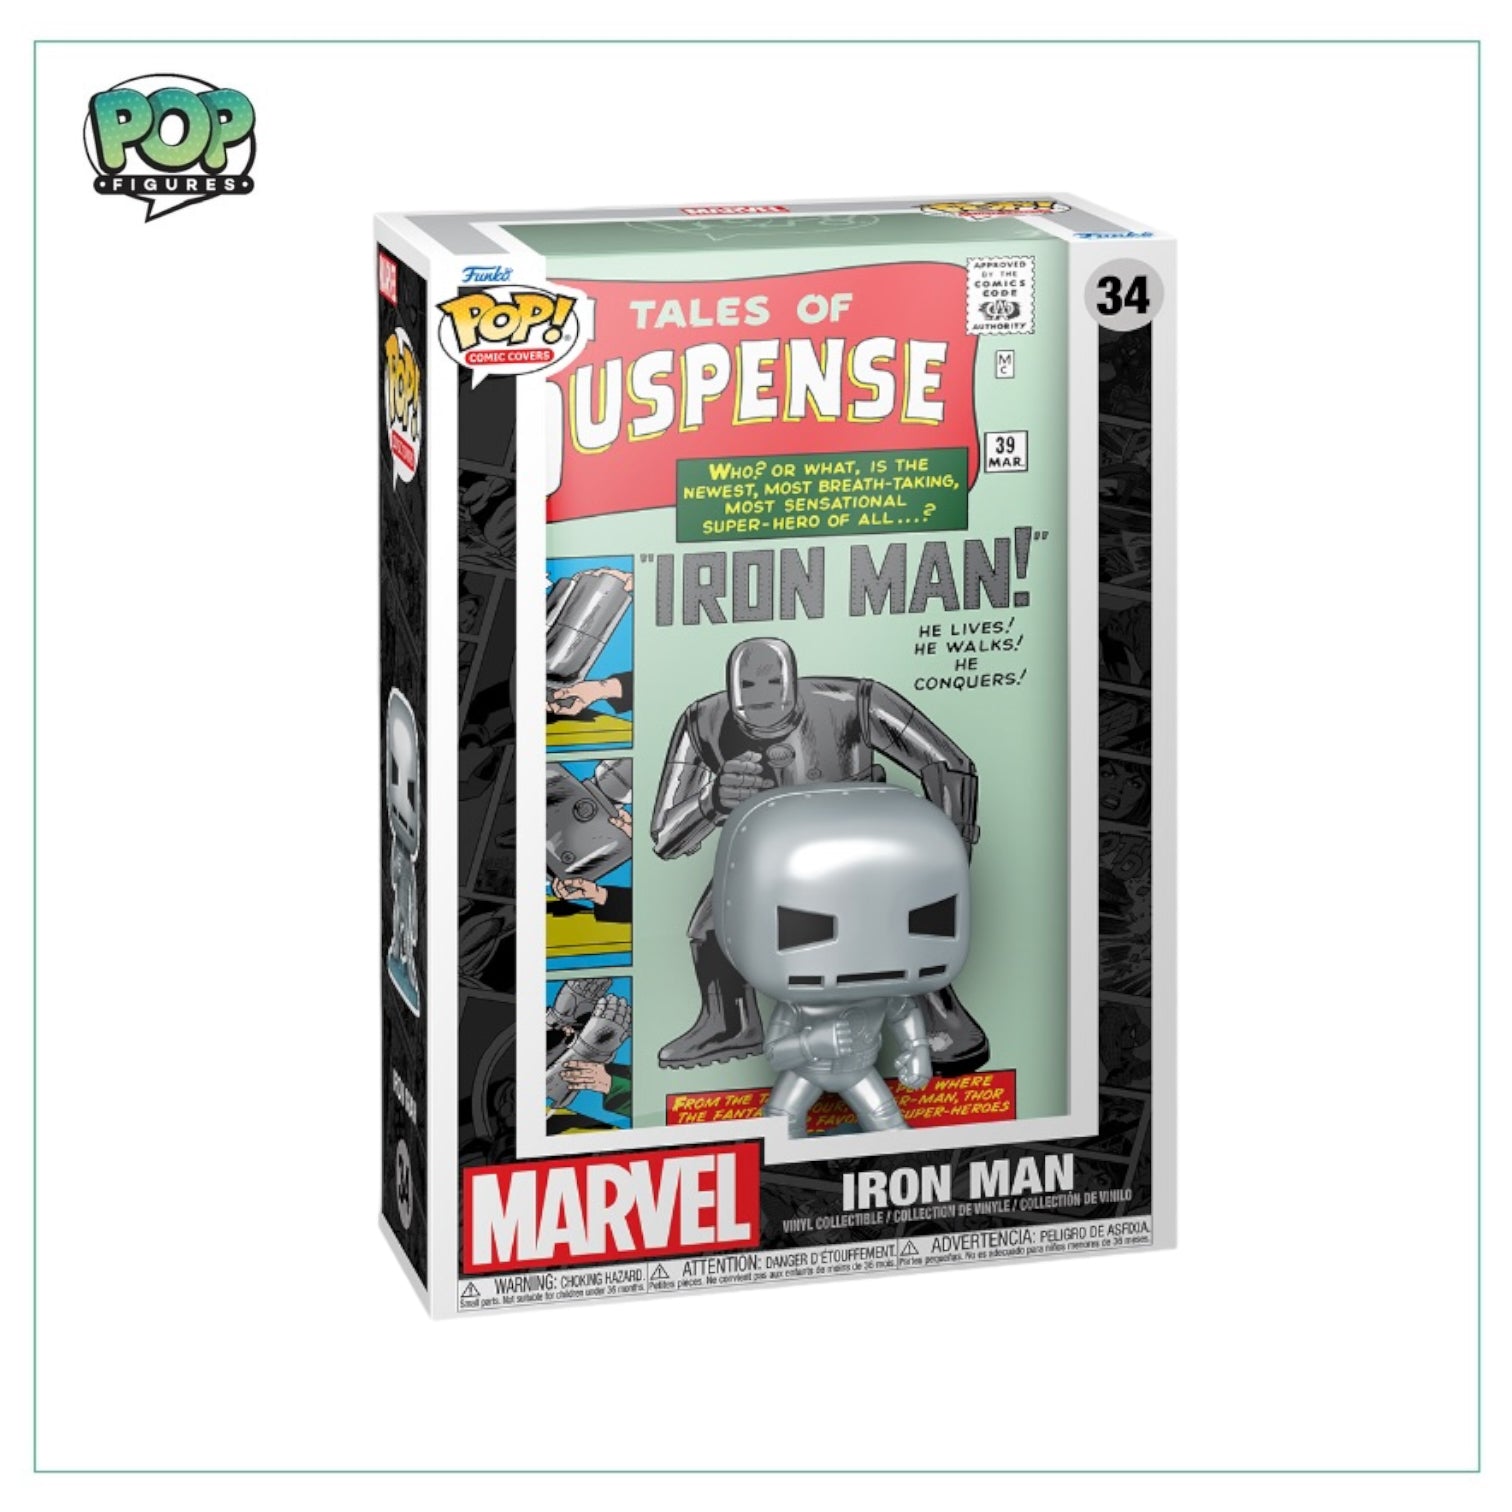 Iron Man #34 (Tales of Suspense) Funko Pop Comic Cover! - Marvel